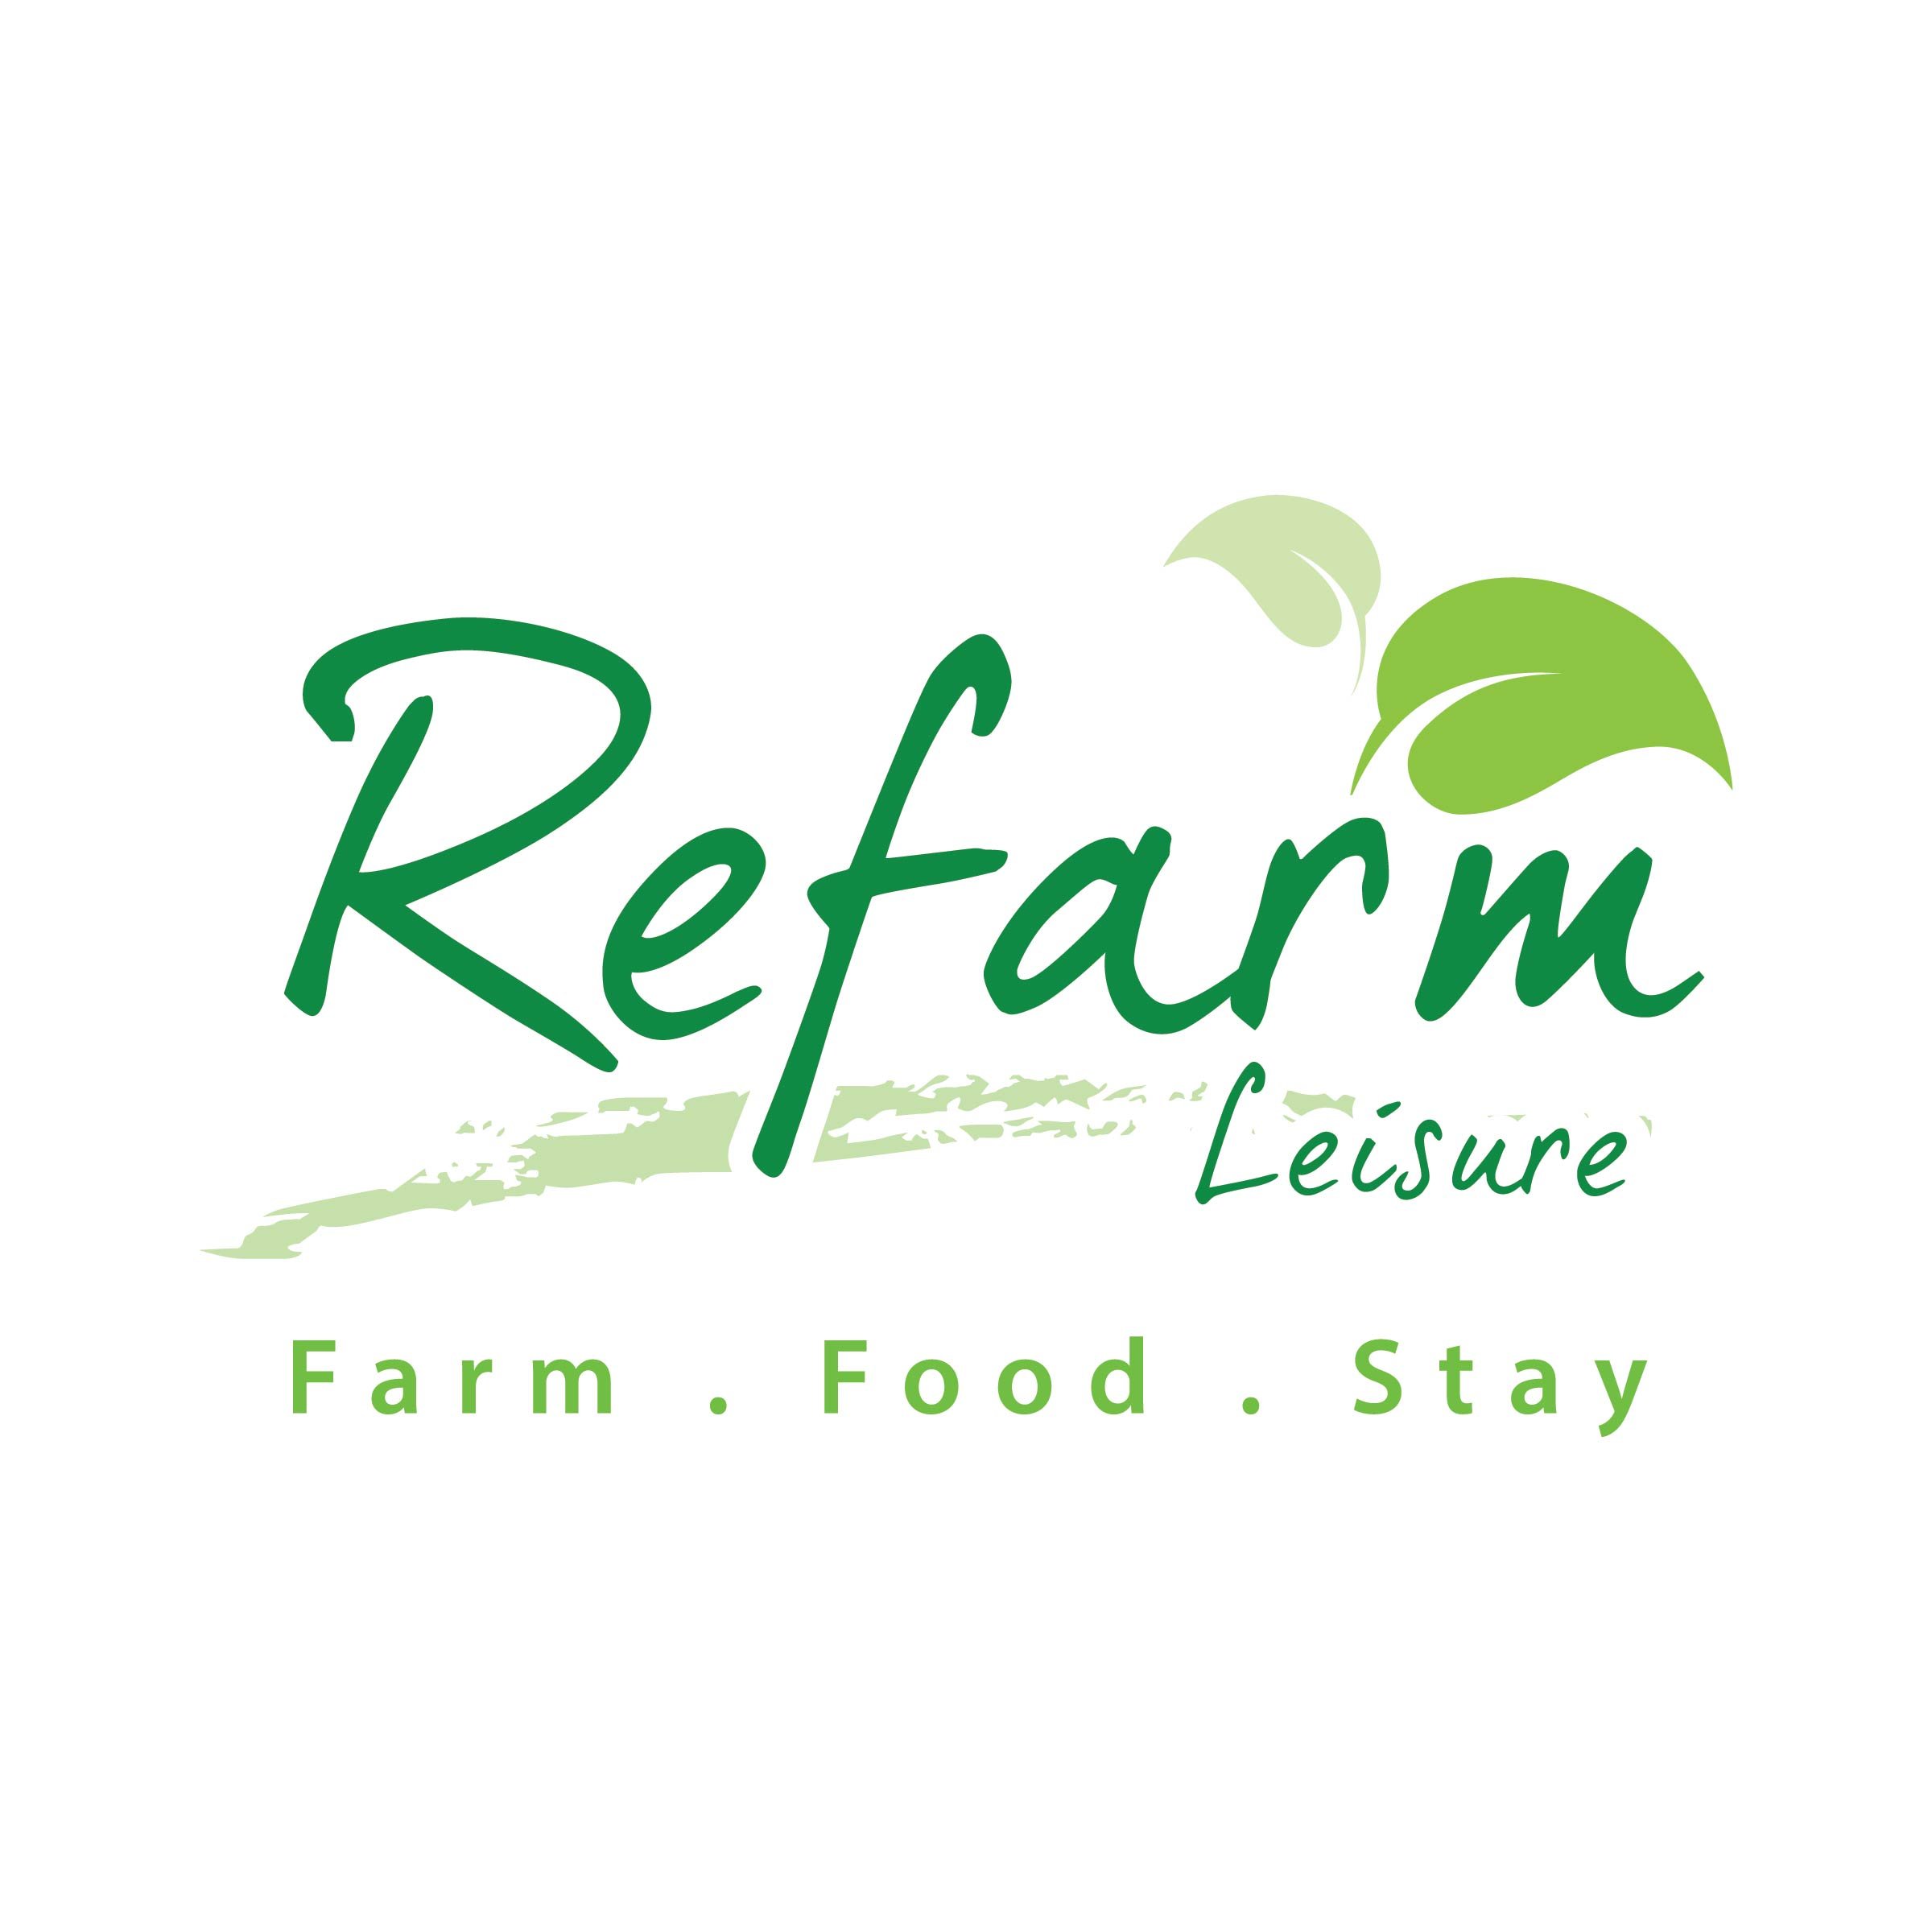 Official Twitter Account for Refarm Leisure Farm.
Contact : 012-5026115 (9am-6pm)